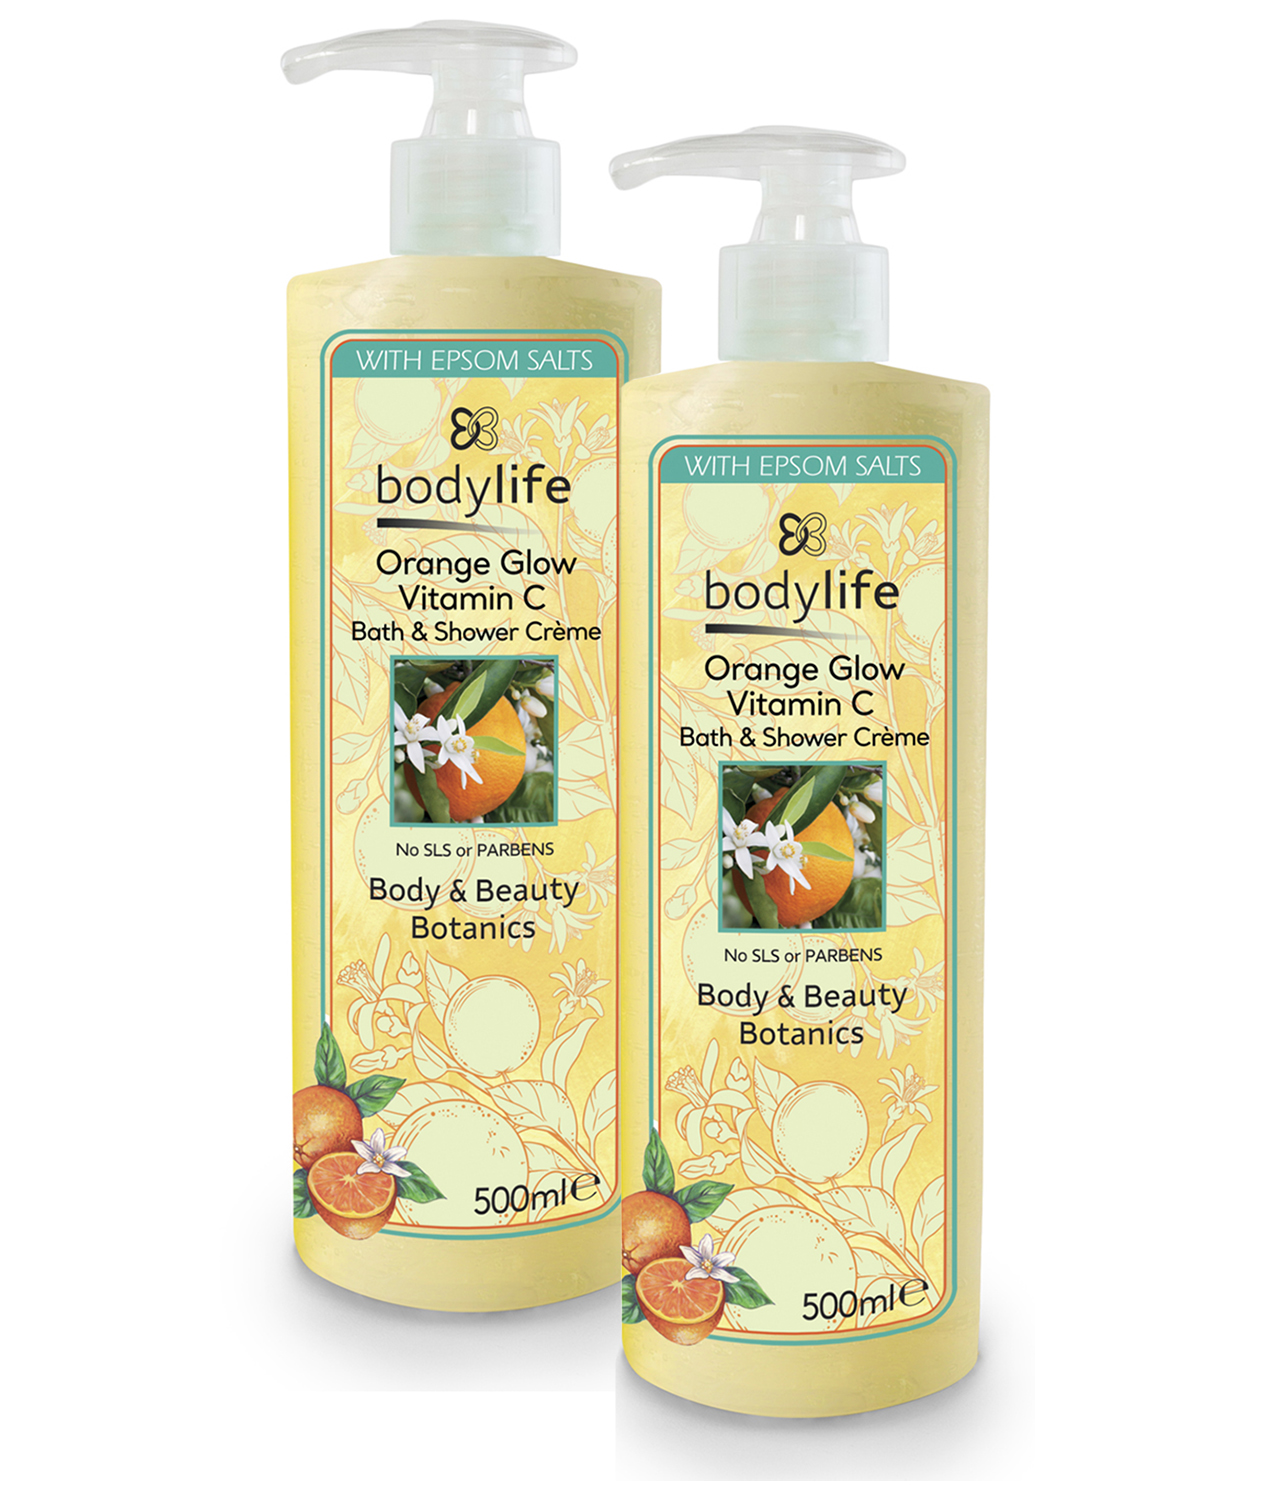 Bodylife Body Wash Epsom salts Vitamin C Shower Creme Orange Glow 500ml Duo 